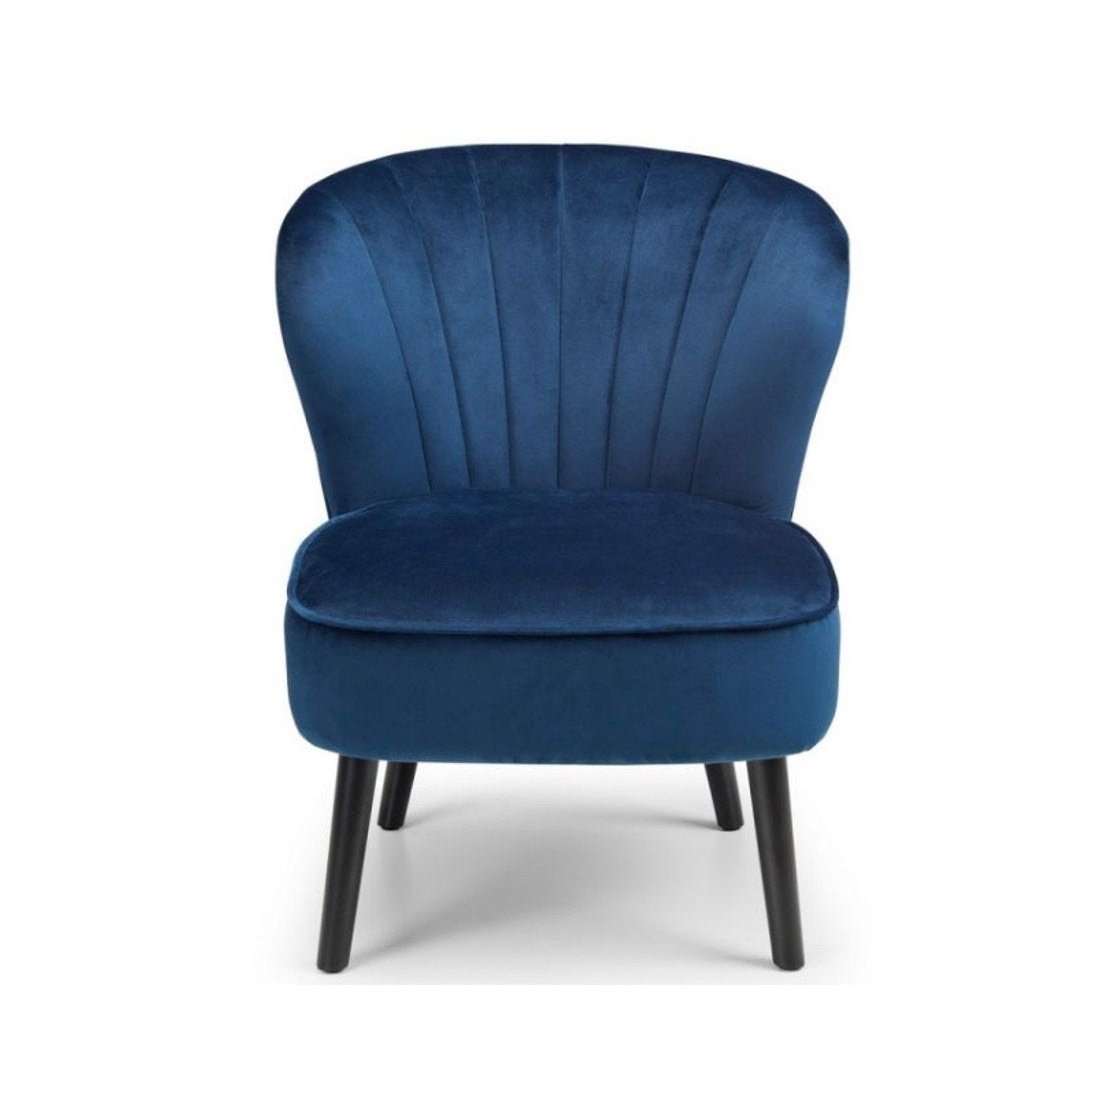 Rochelle accent chair - blue velvet | Manor Interiors